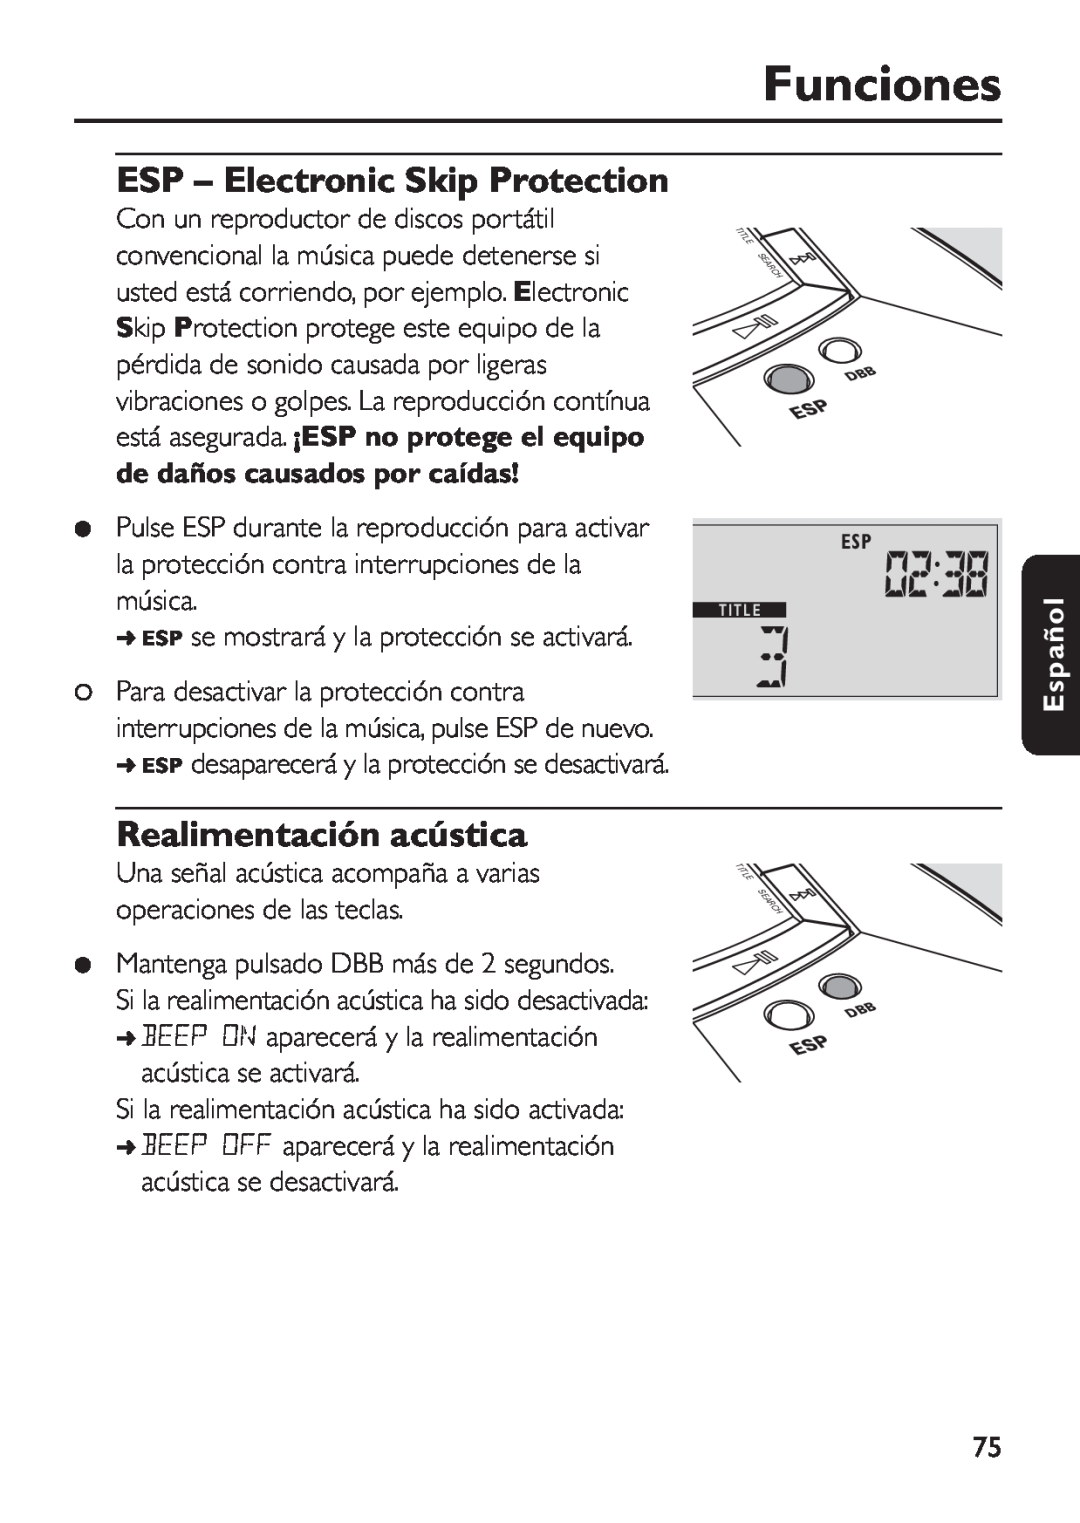 Philips EXP 501/00 Realimentación acústica, de daños causados por caídas, Funciones, ESP - Electronic Skip Protection 